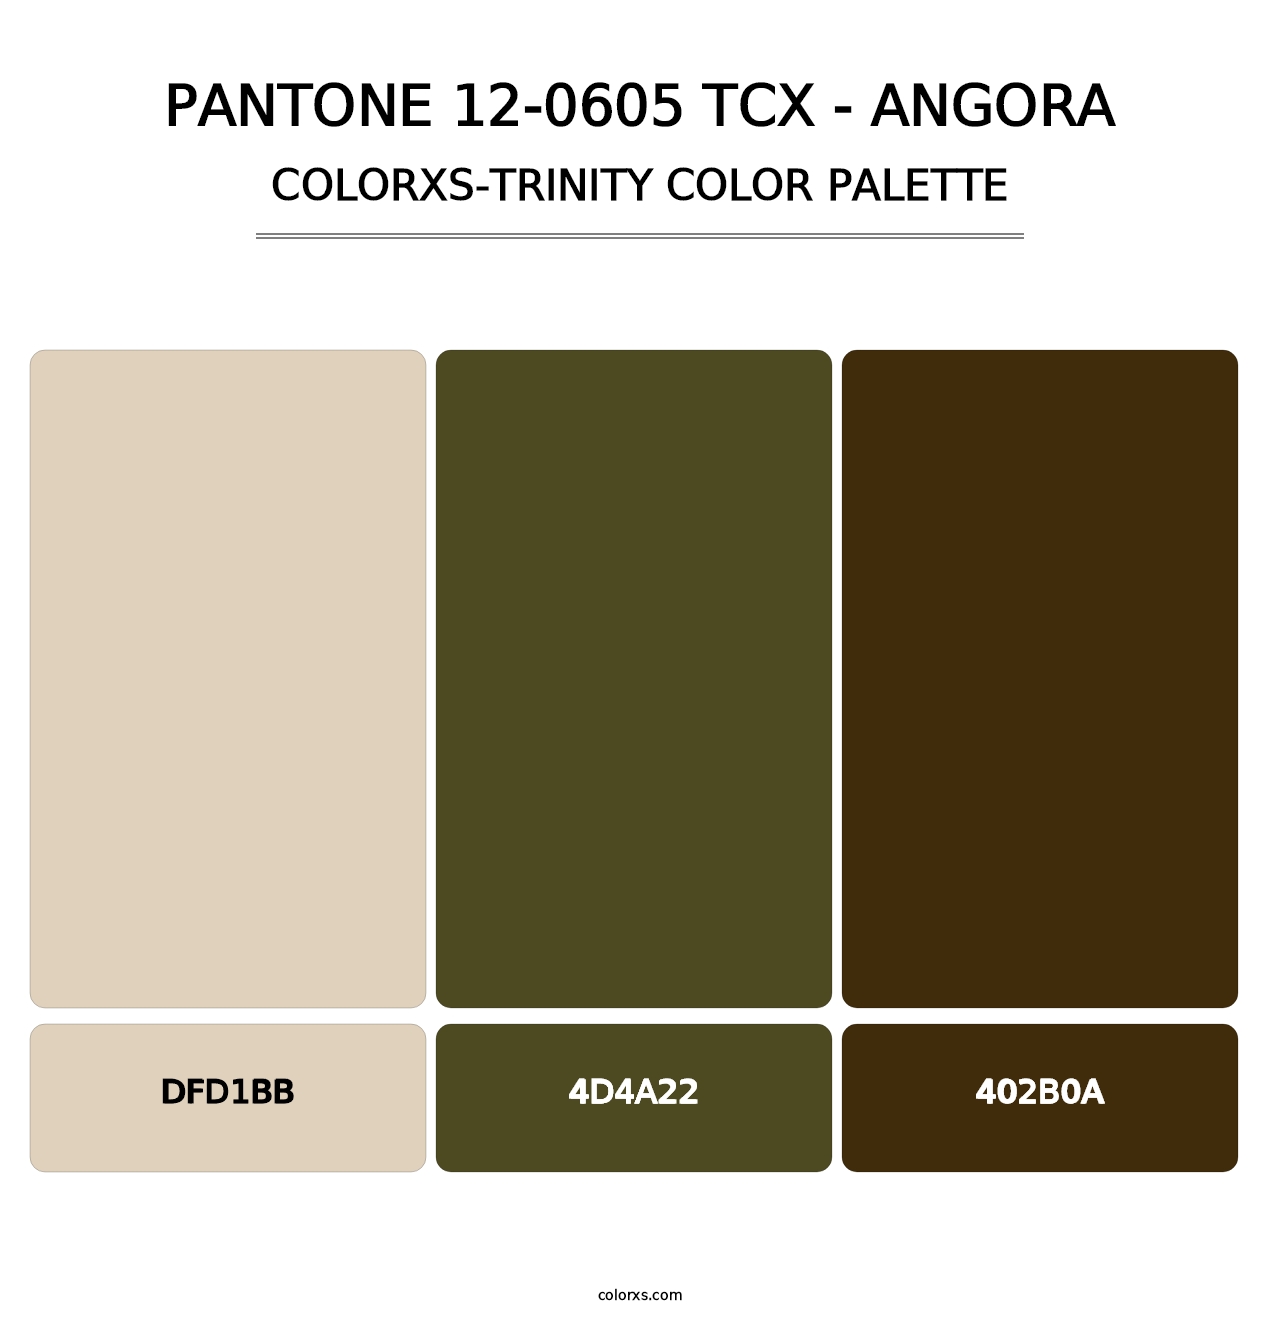 PANTONE 12-0605 TCX - Angora - Colorxs Trinity Palette